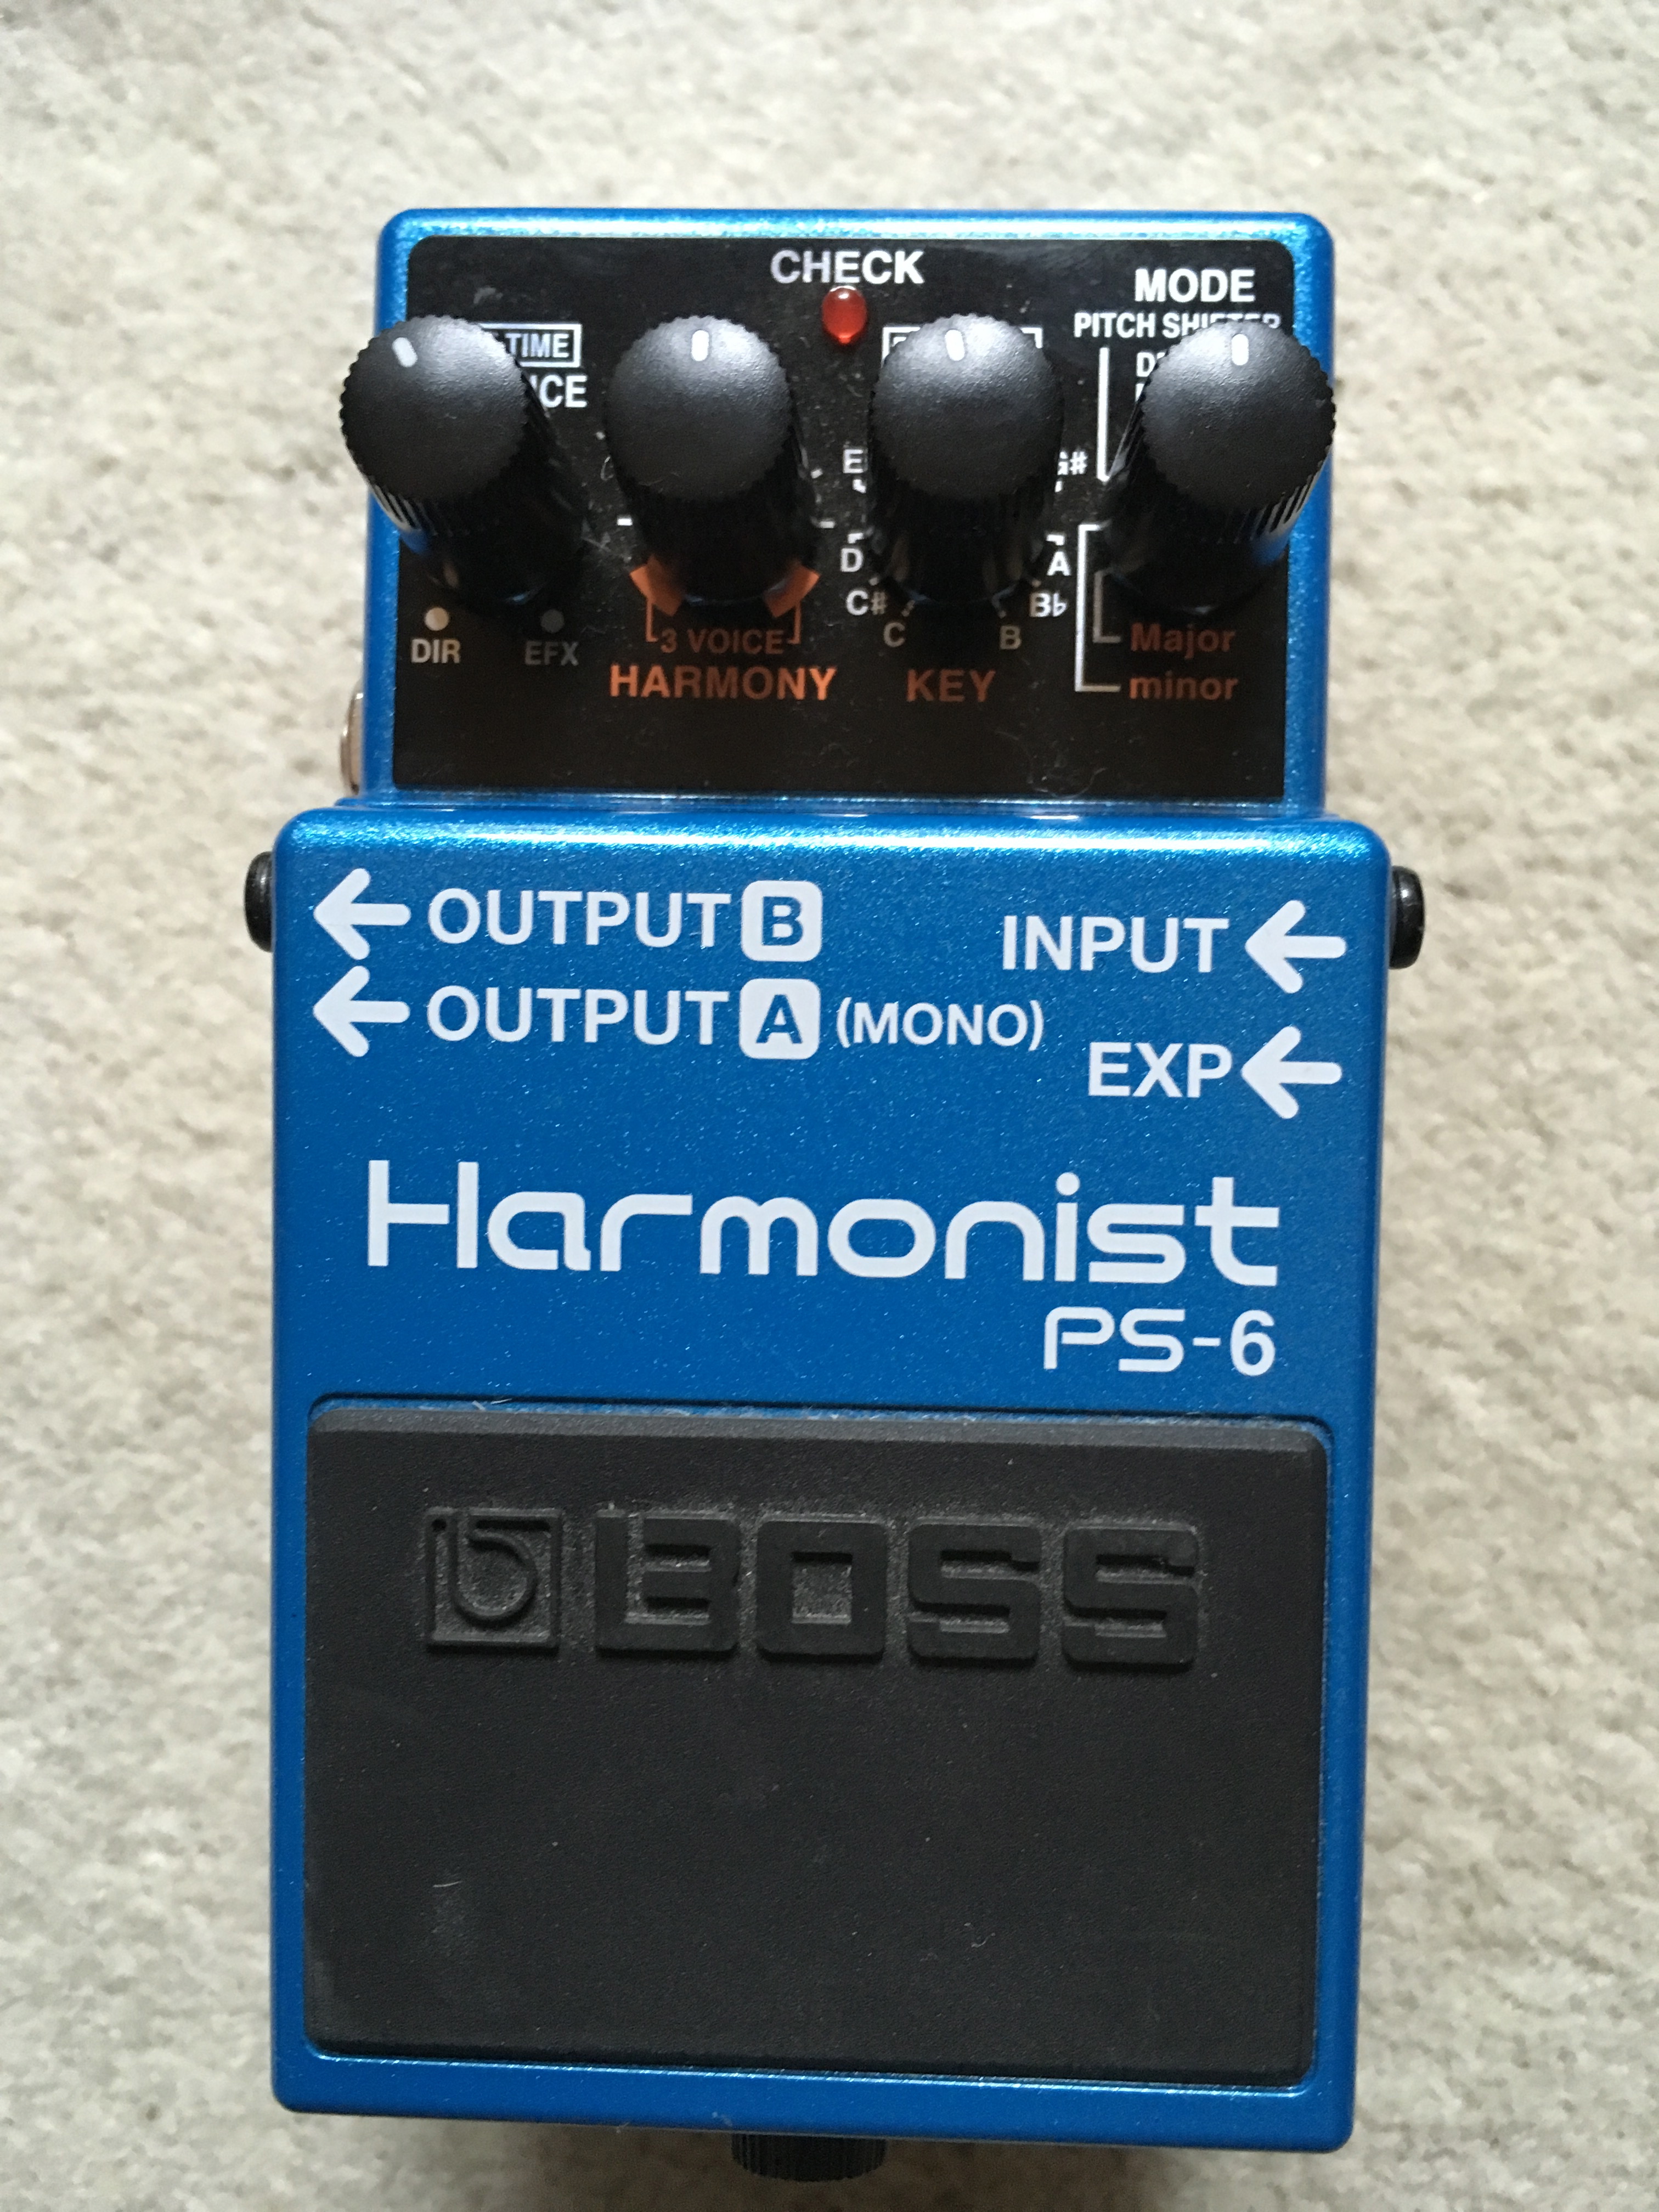 PS-6 HARMONIST - Boss PS-6 Harmonist - Audiofanzine